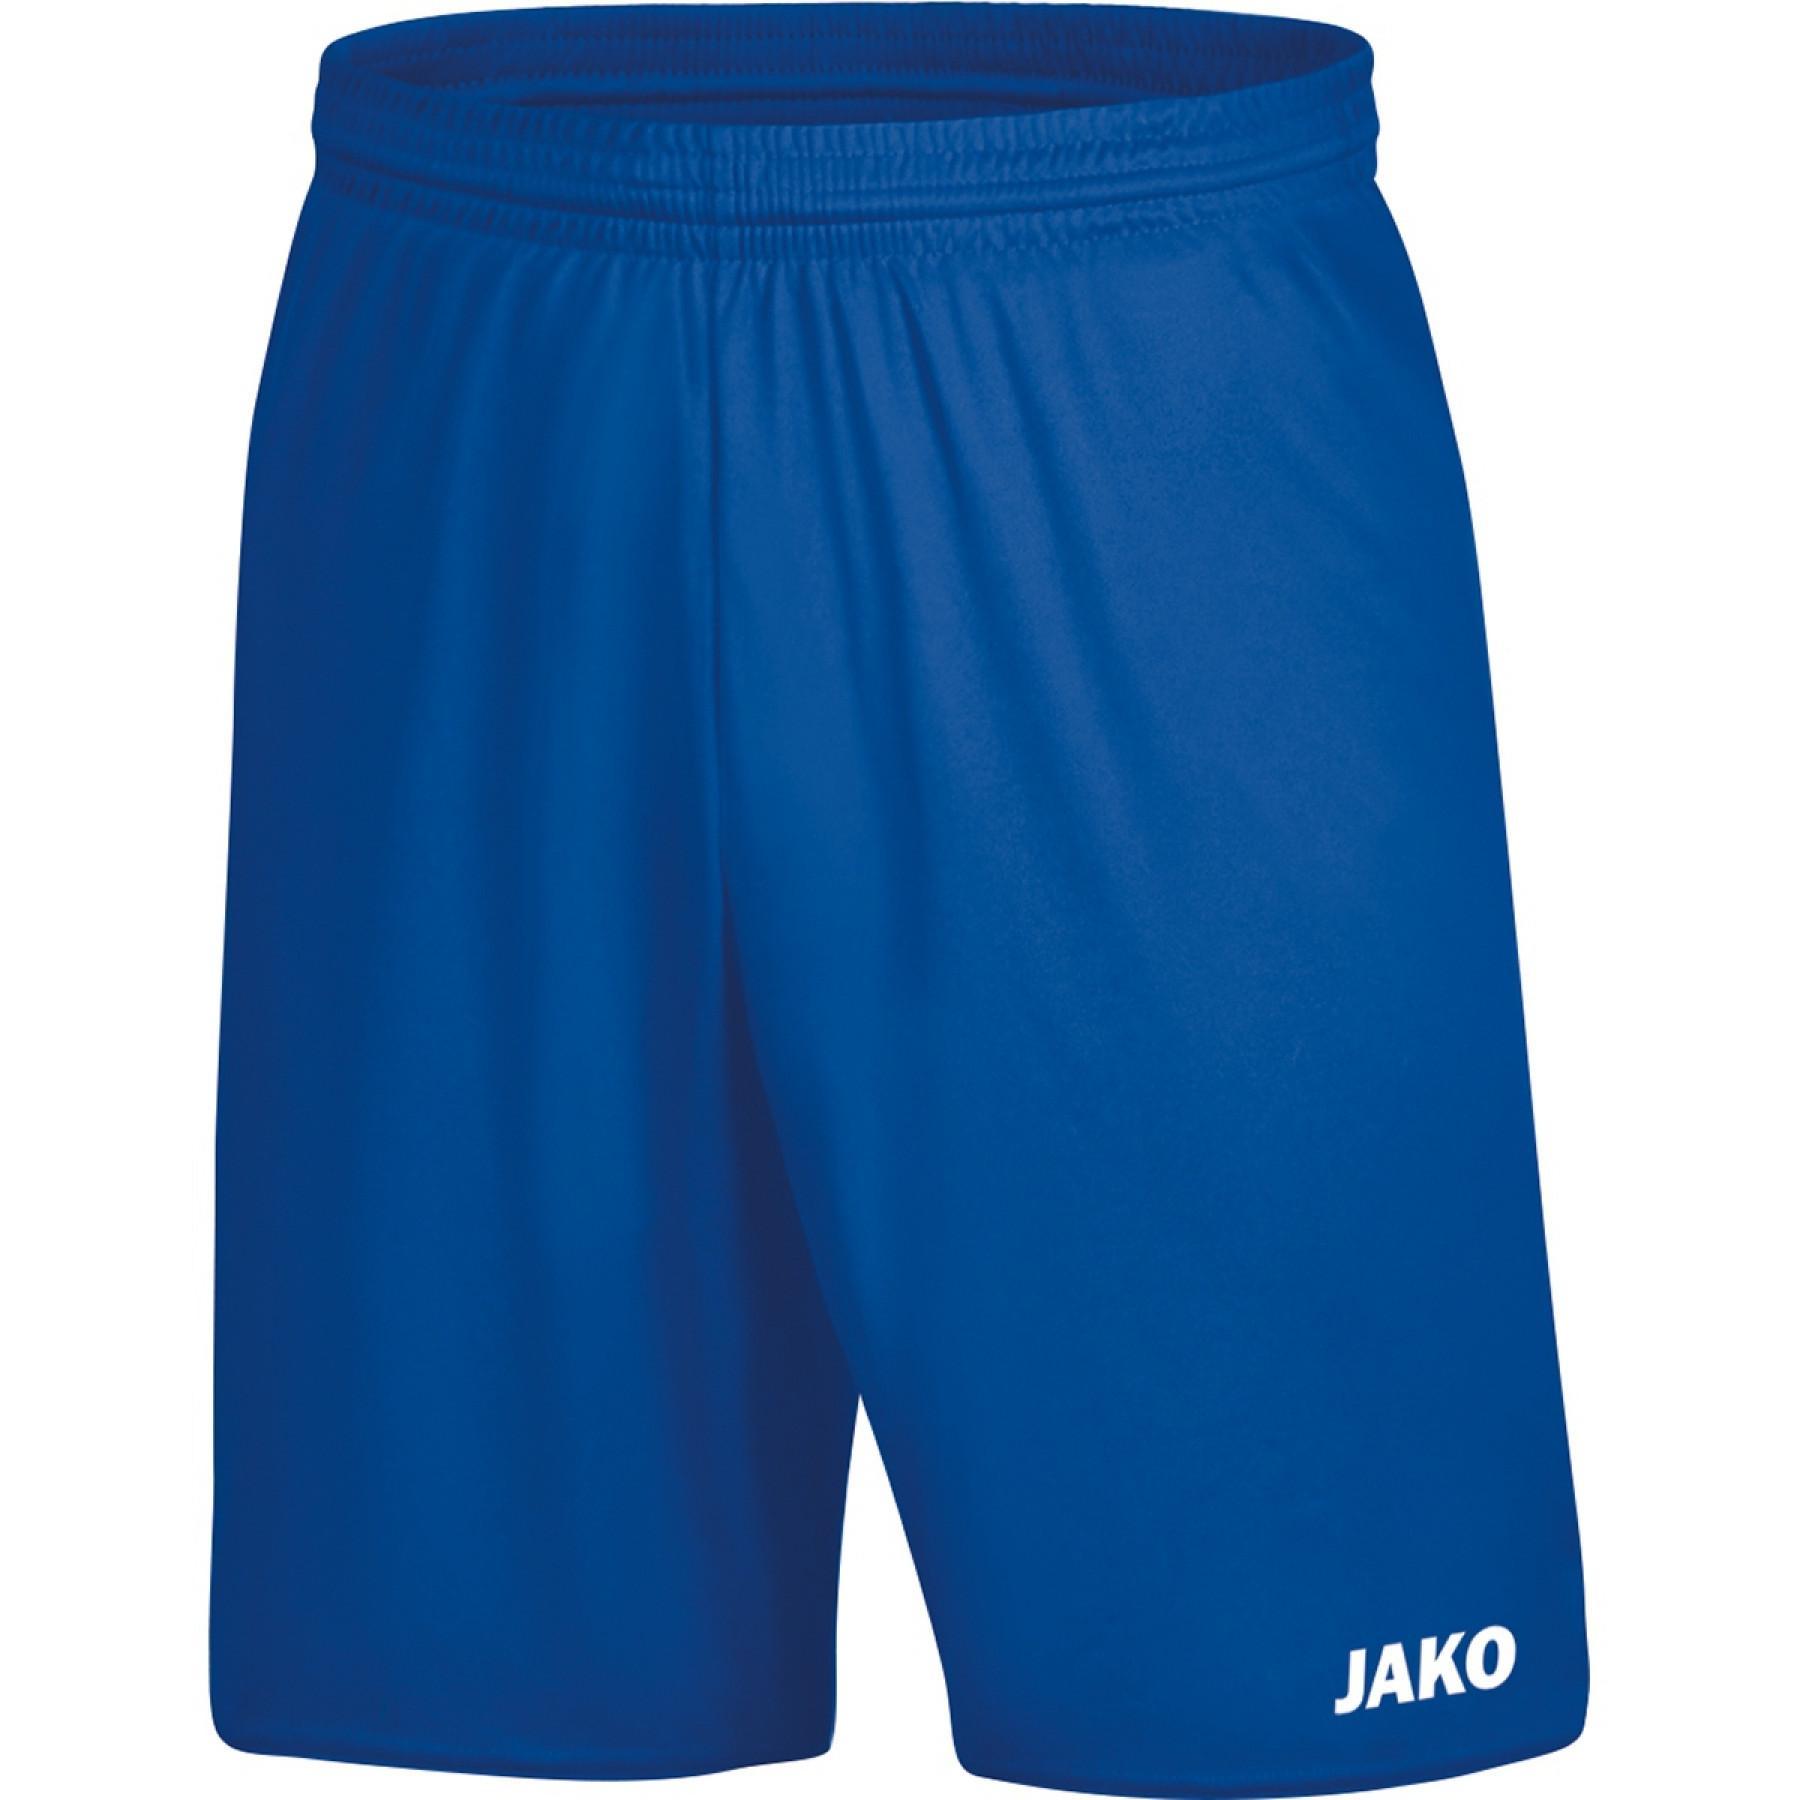 Dames shorts Jako Manchester 2.0